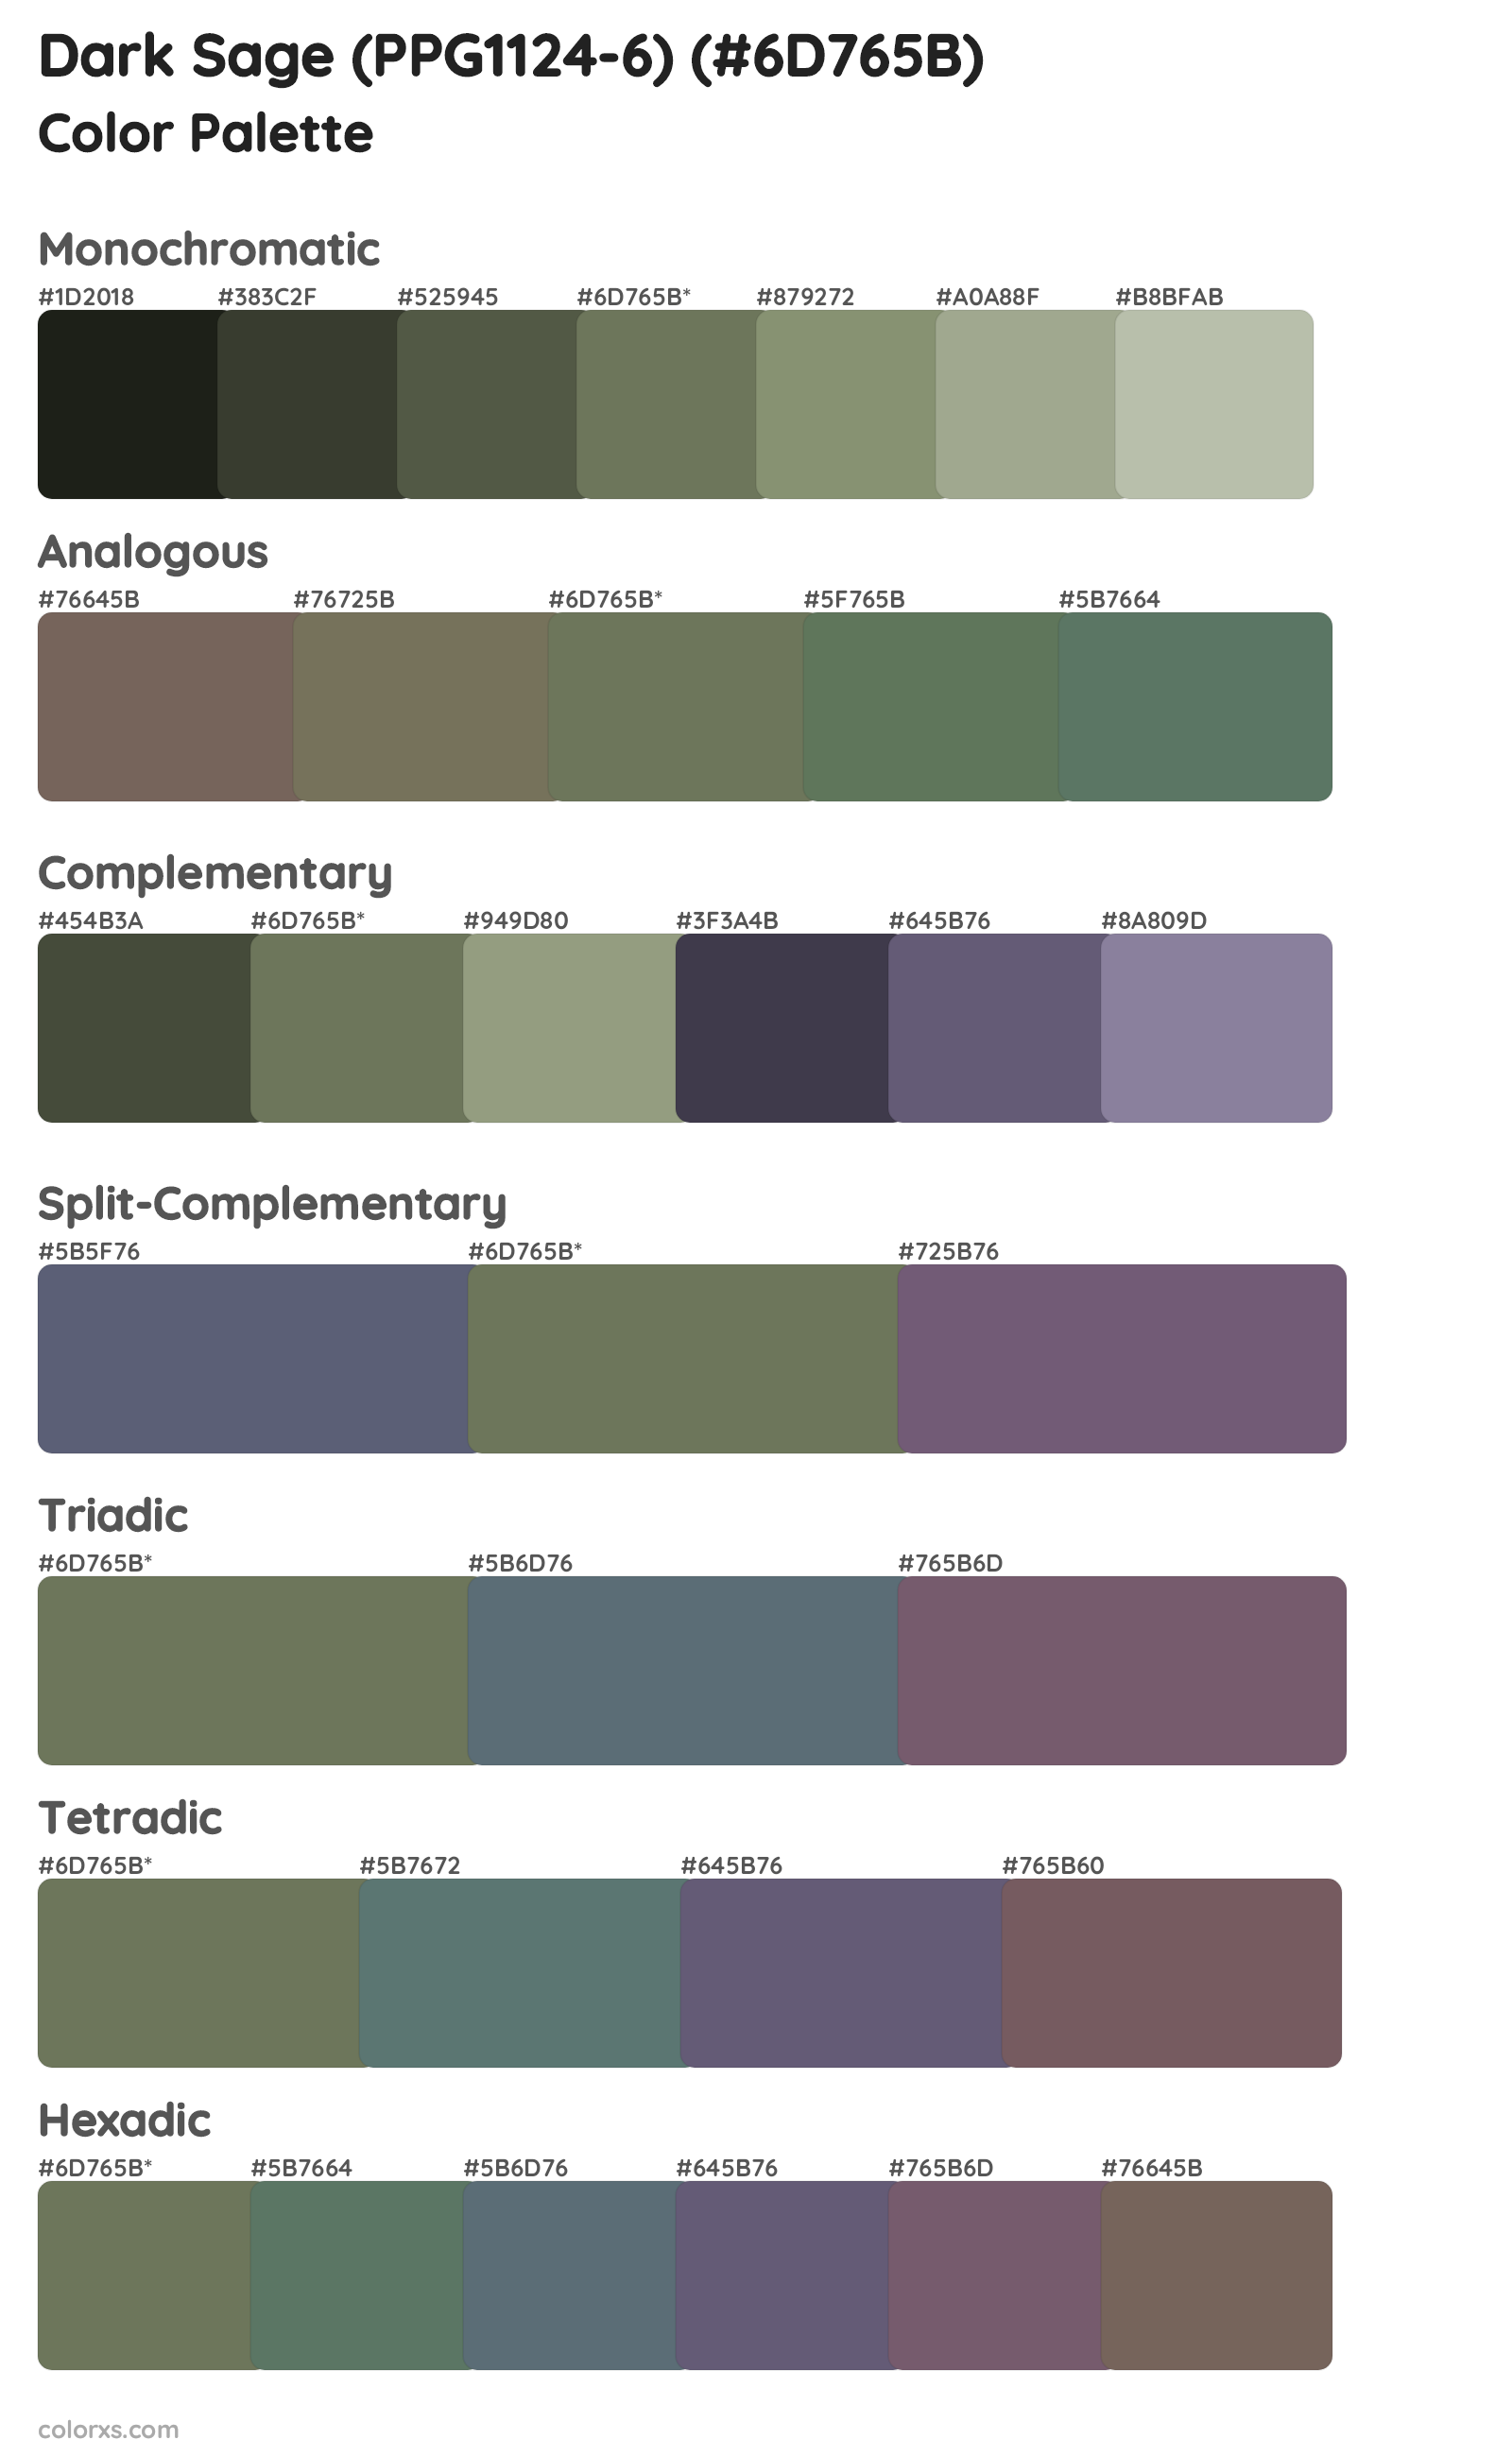 Dark Sage (PPG1124-6) Color Scheme Palettes